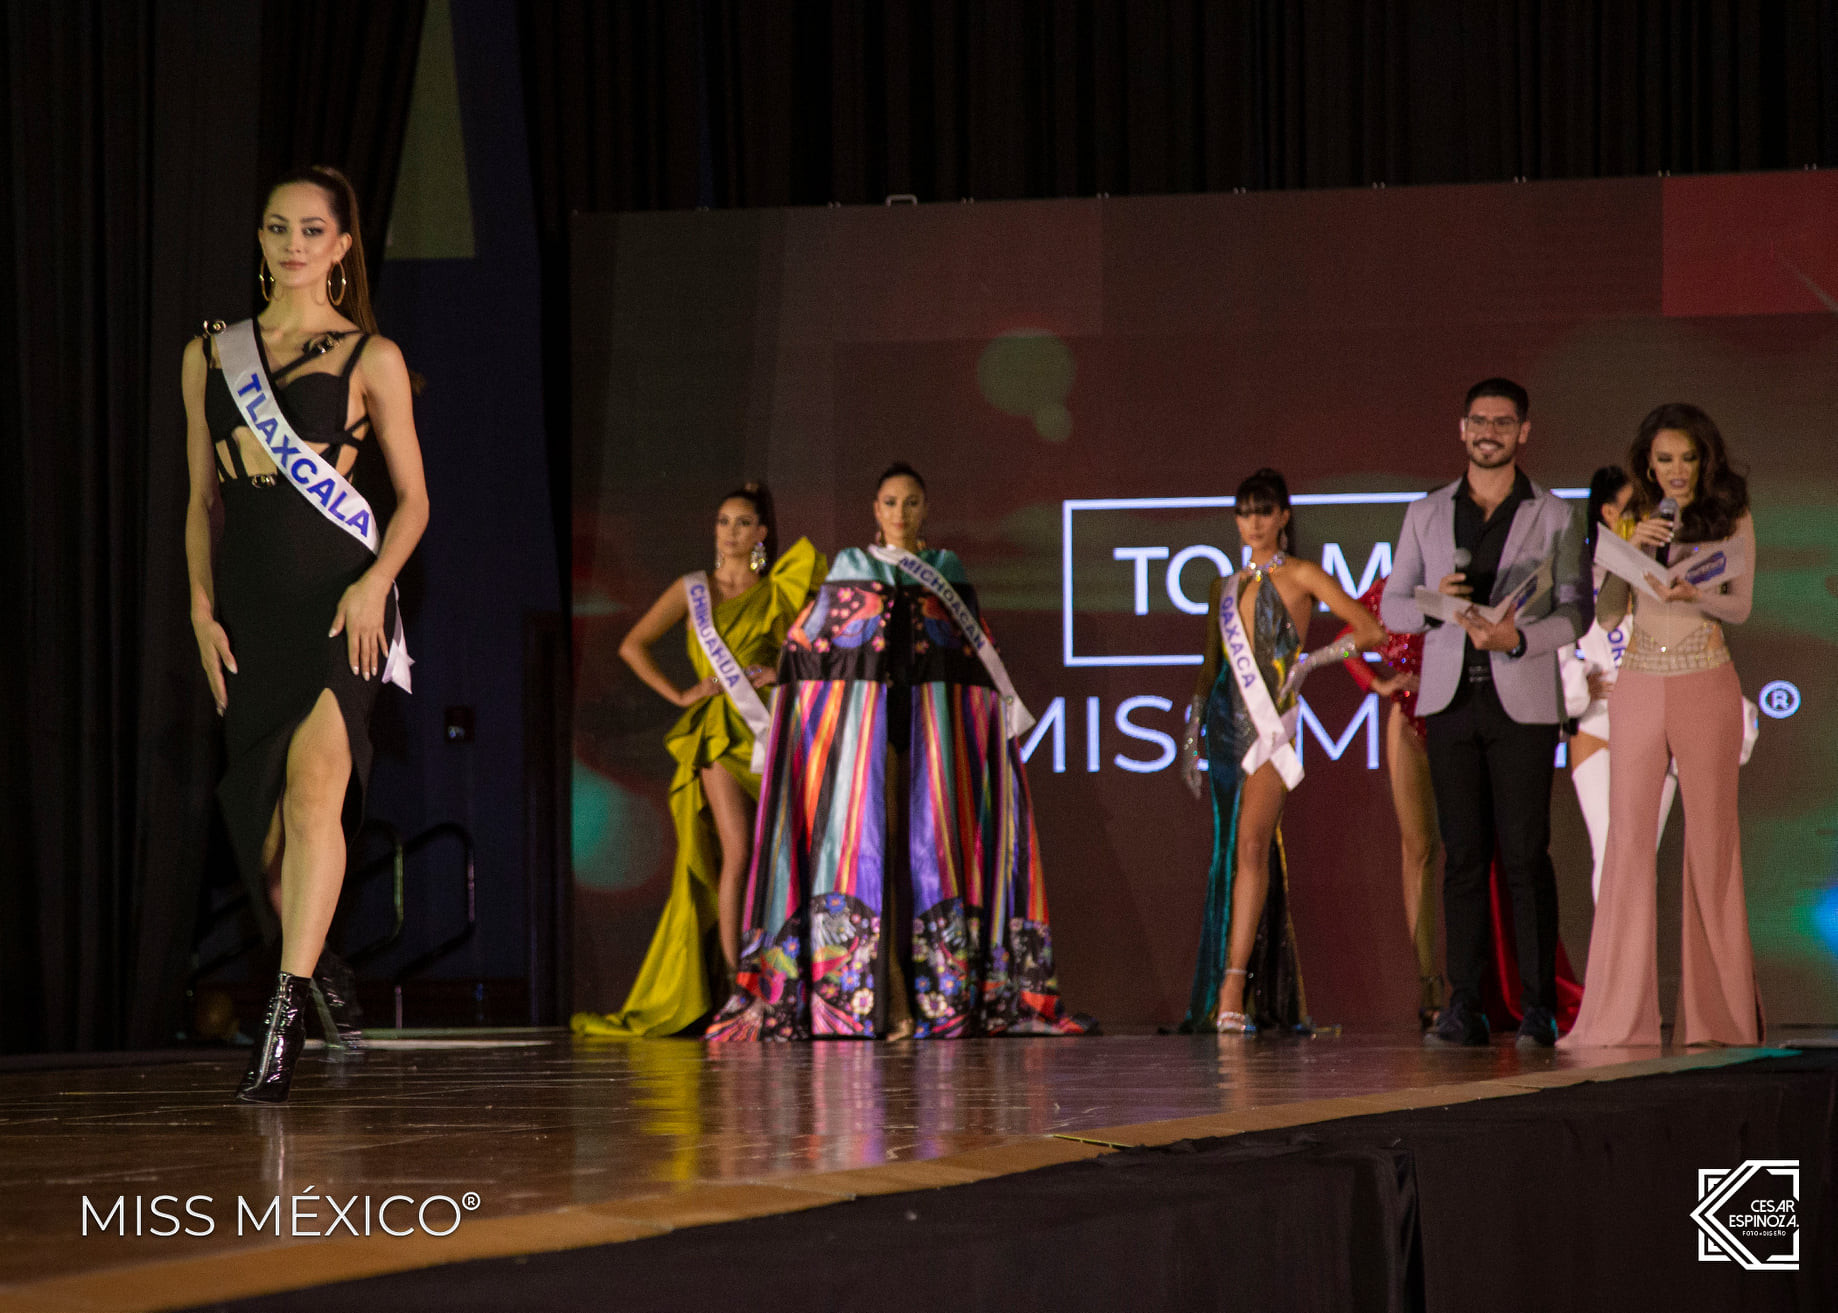 México - top model de miss mexico 2021. - Página 3 On7vef